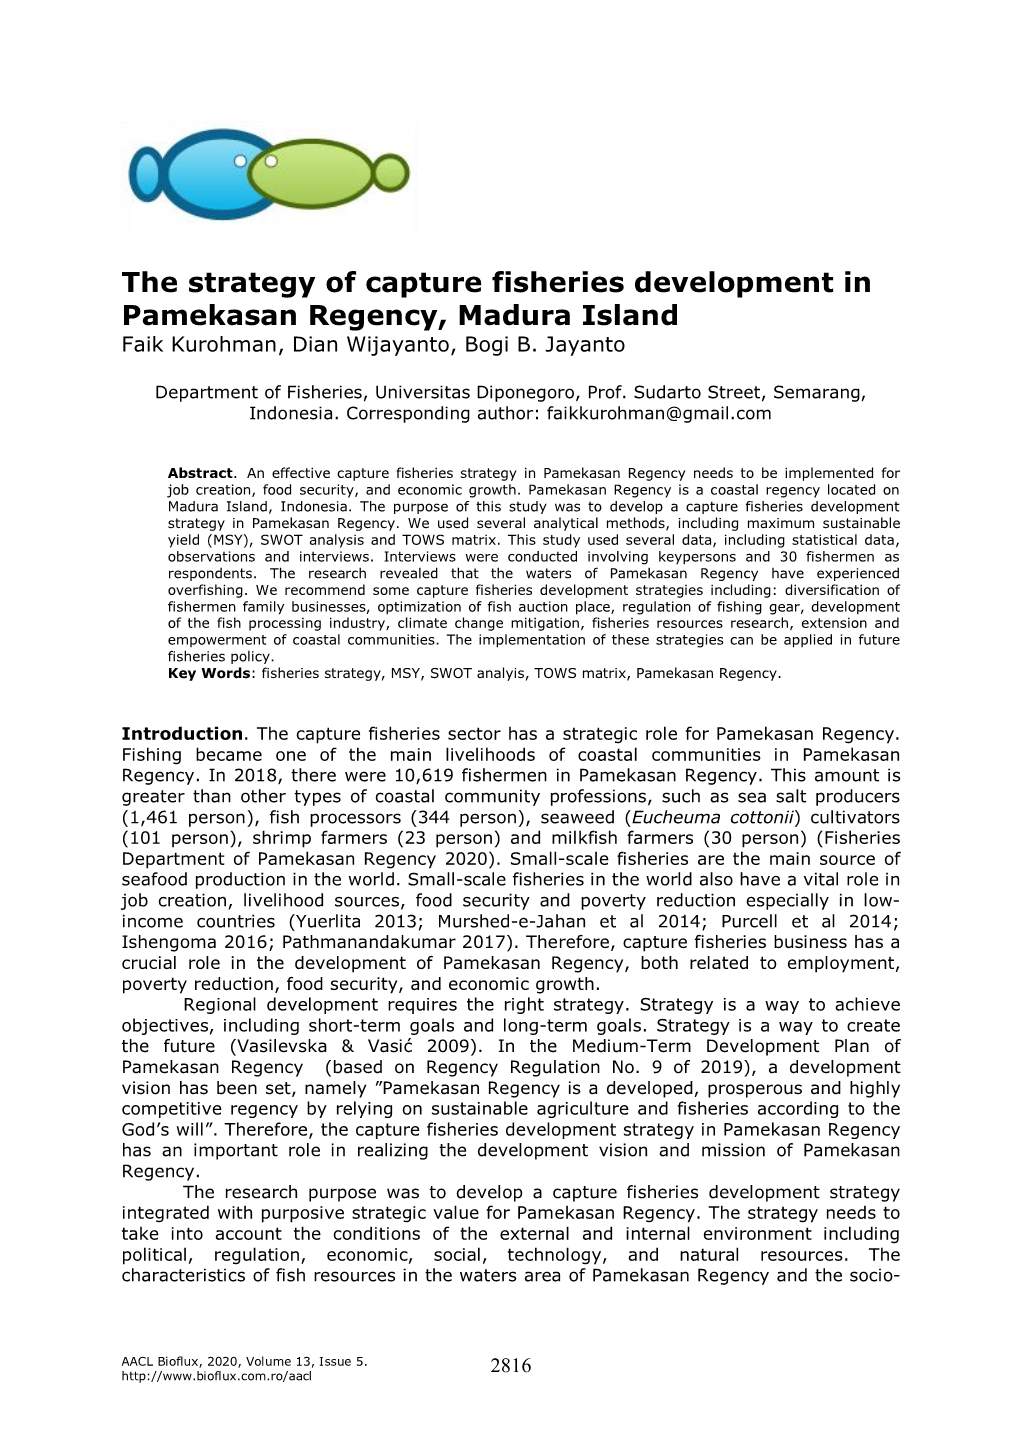 The Strategy of Capture Fisheries Development in Pamekasan Regency, Madura Island Faik Kurohman, Dian Wijayanto, Bogi B